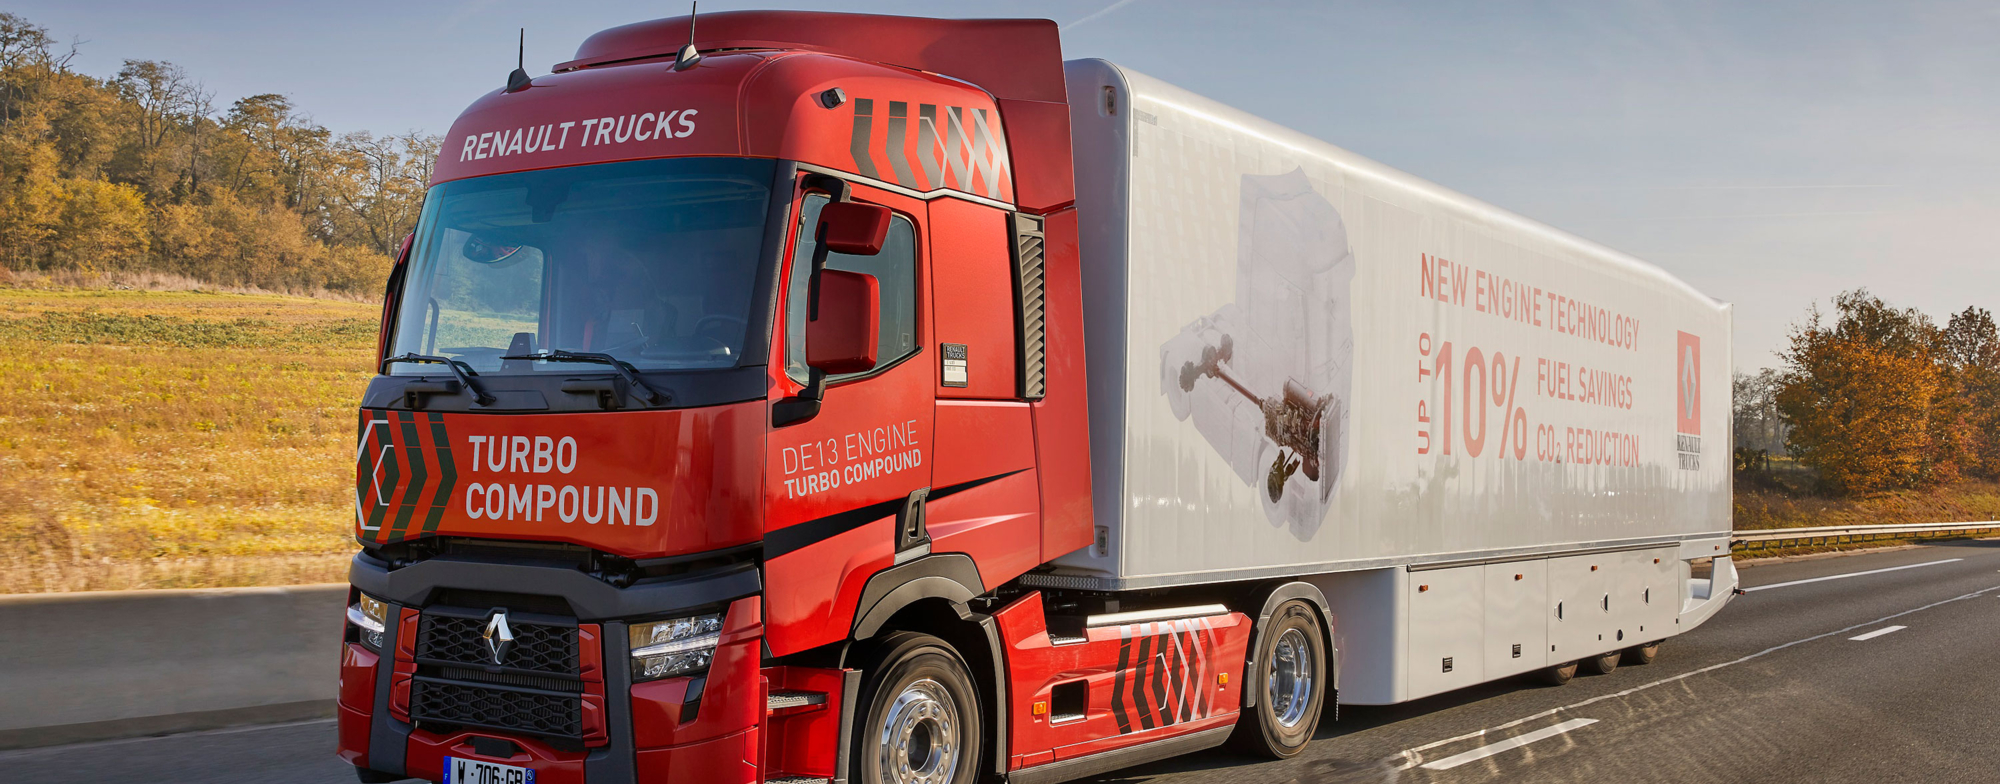 Bluekens-Renault-Trucks-10-procent-brandstofbesparing-1